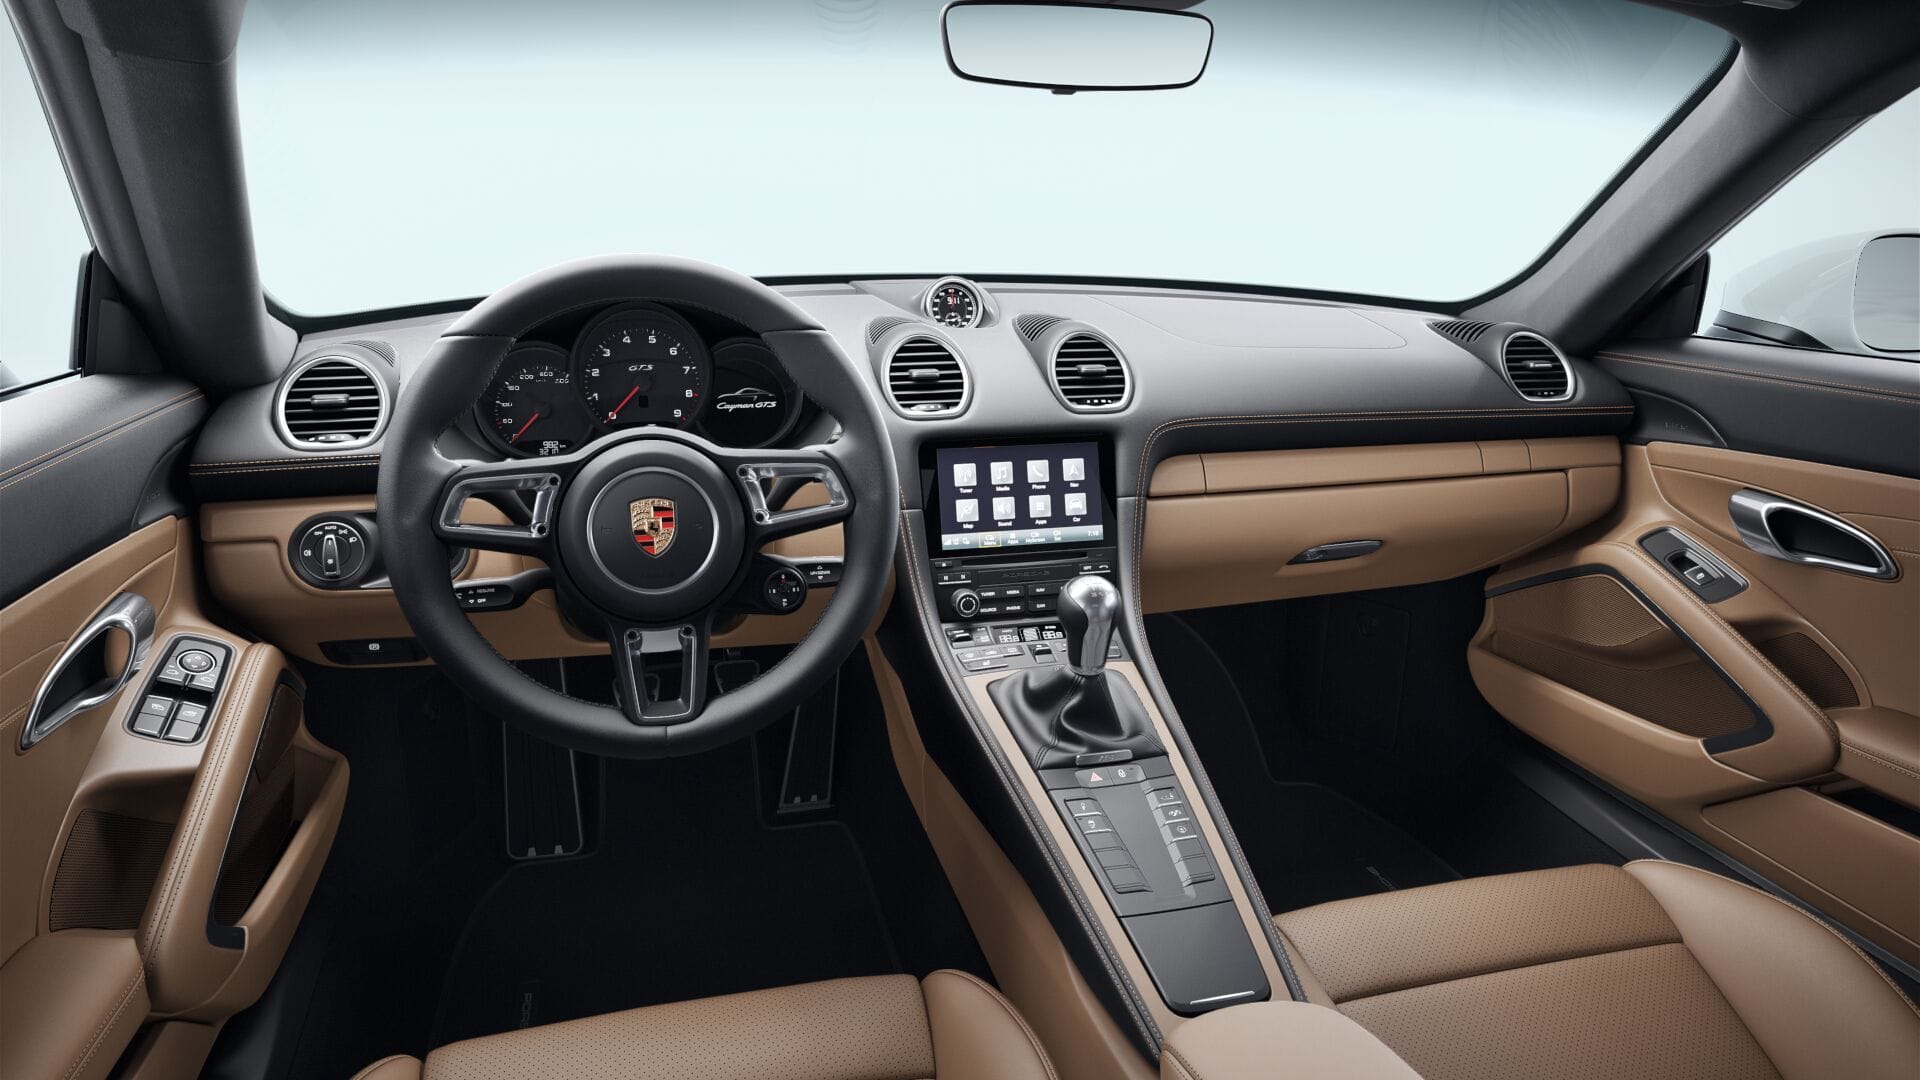 Interior Options pics... - Page 2 - Rennlist - Porsche Discussion Forums